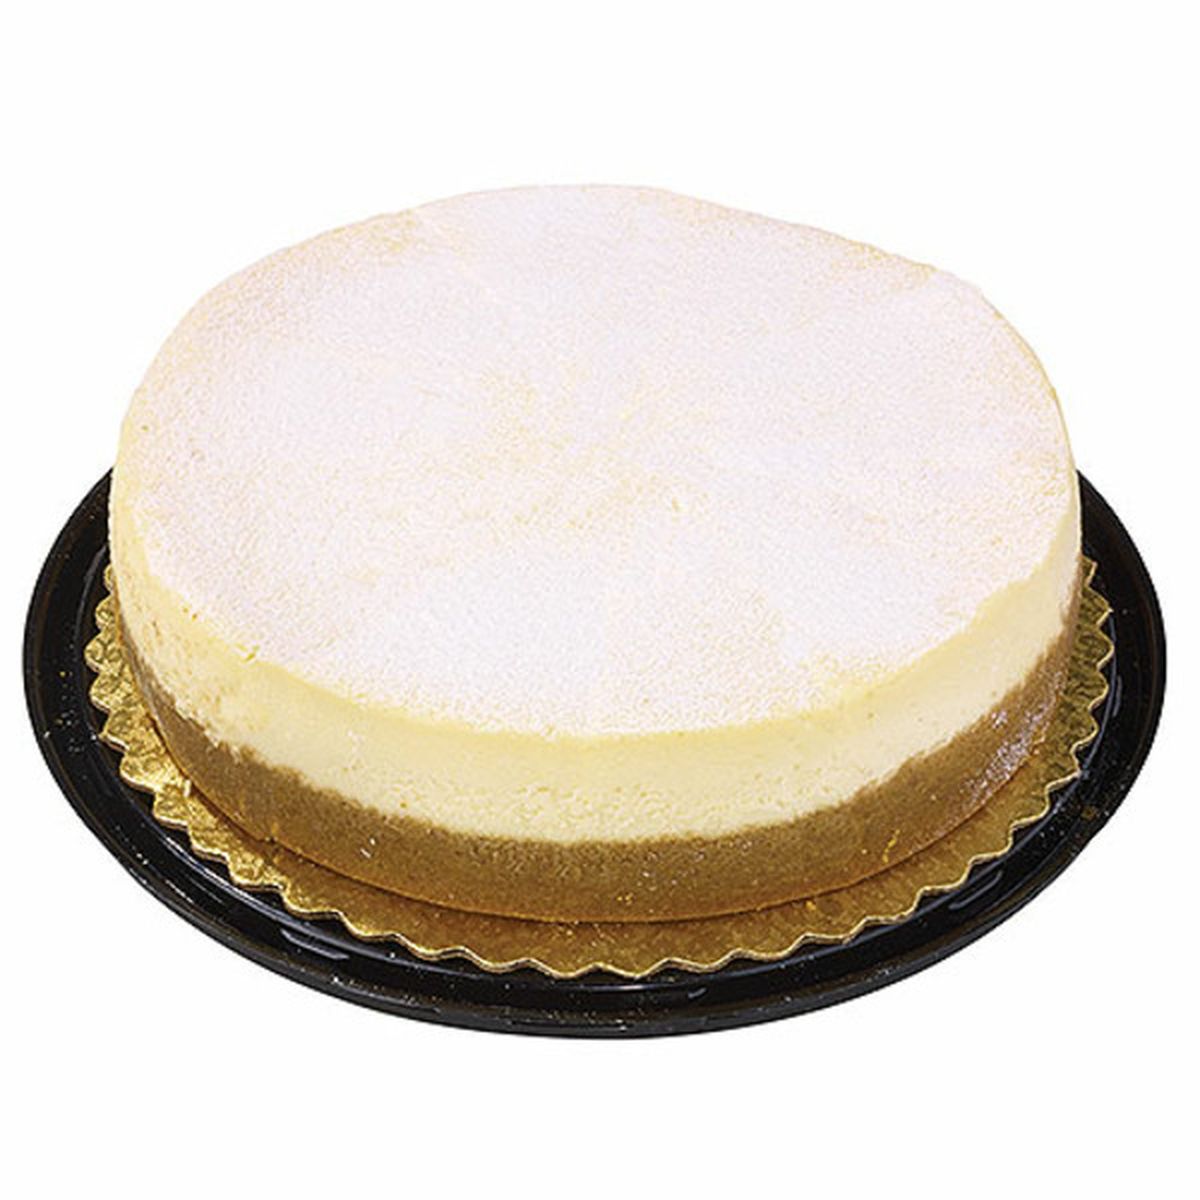 Calories in Wegmans Large Ultimate Plain Cheesecake